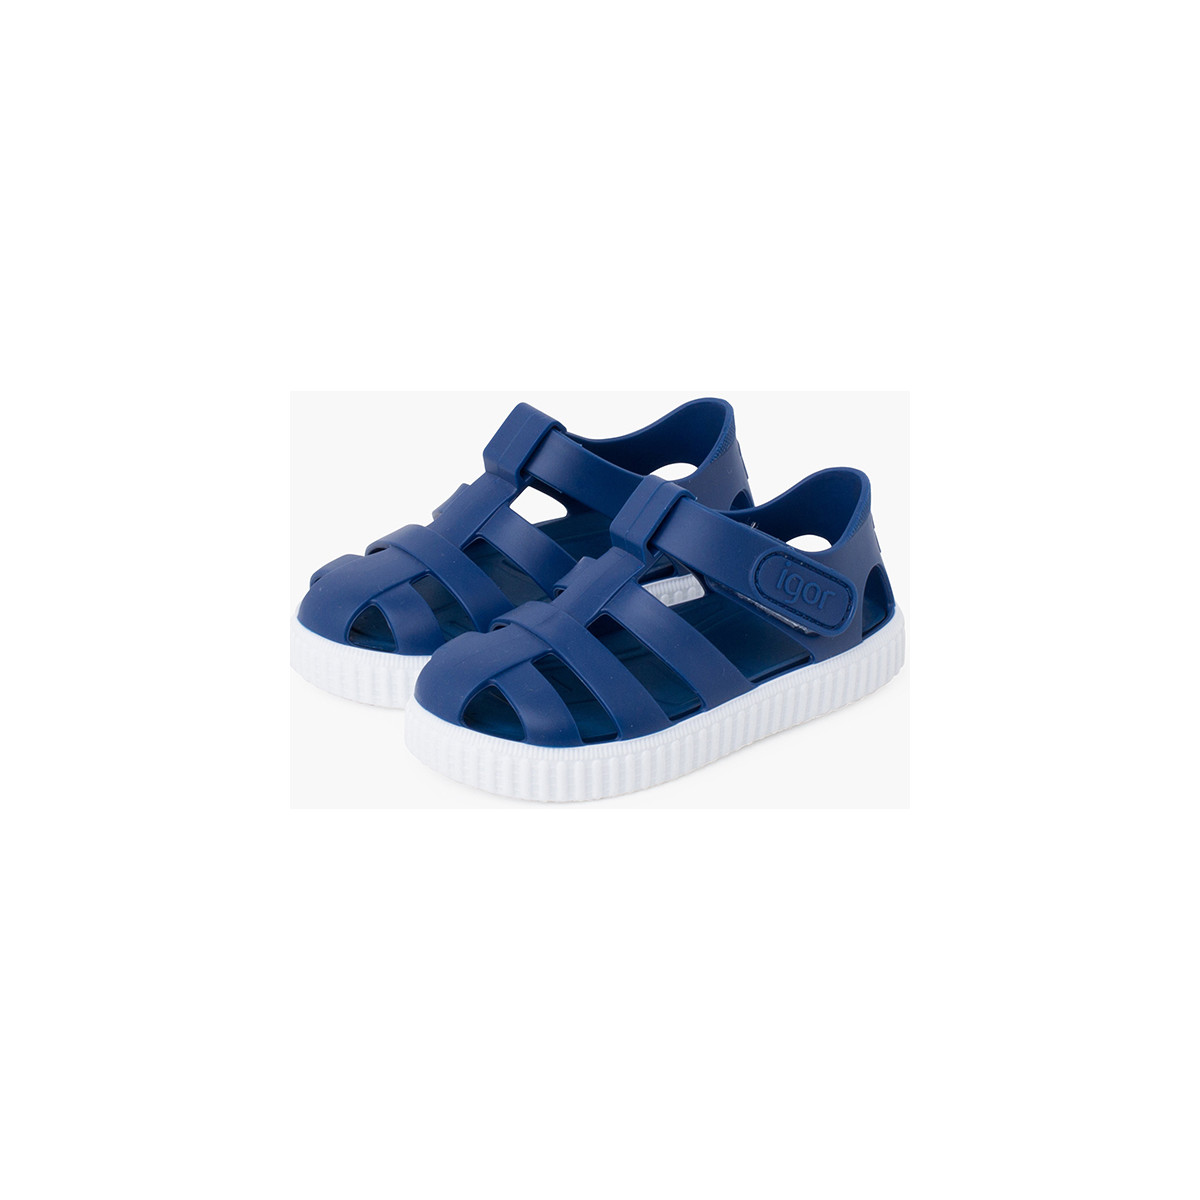 Pisamonas Bleu Sandales plastique type baskets à scratch YKN3ptSJ